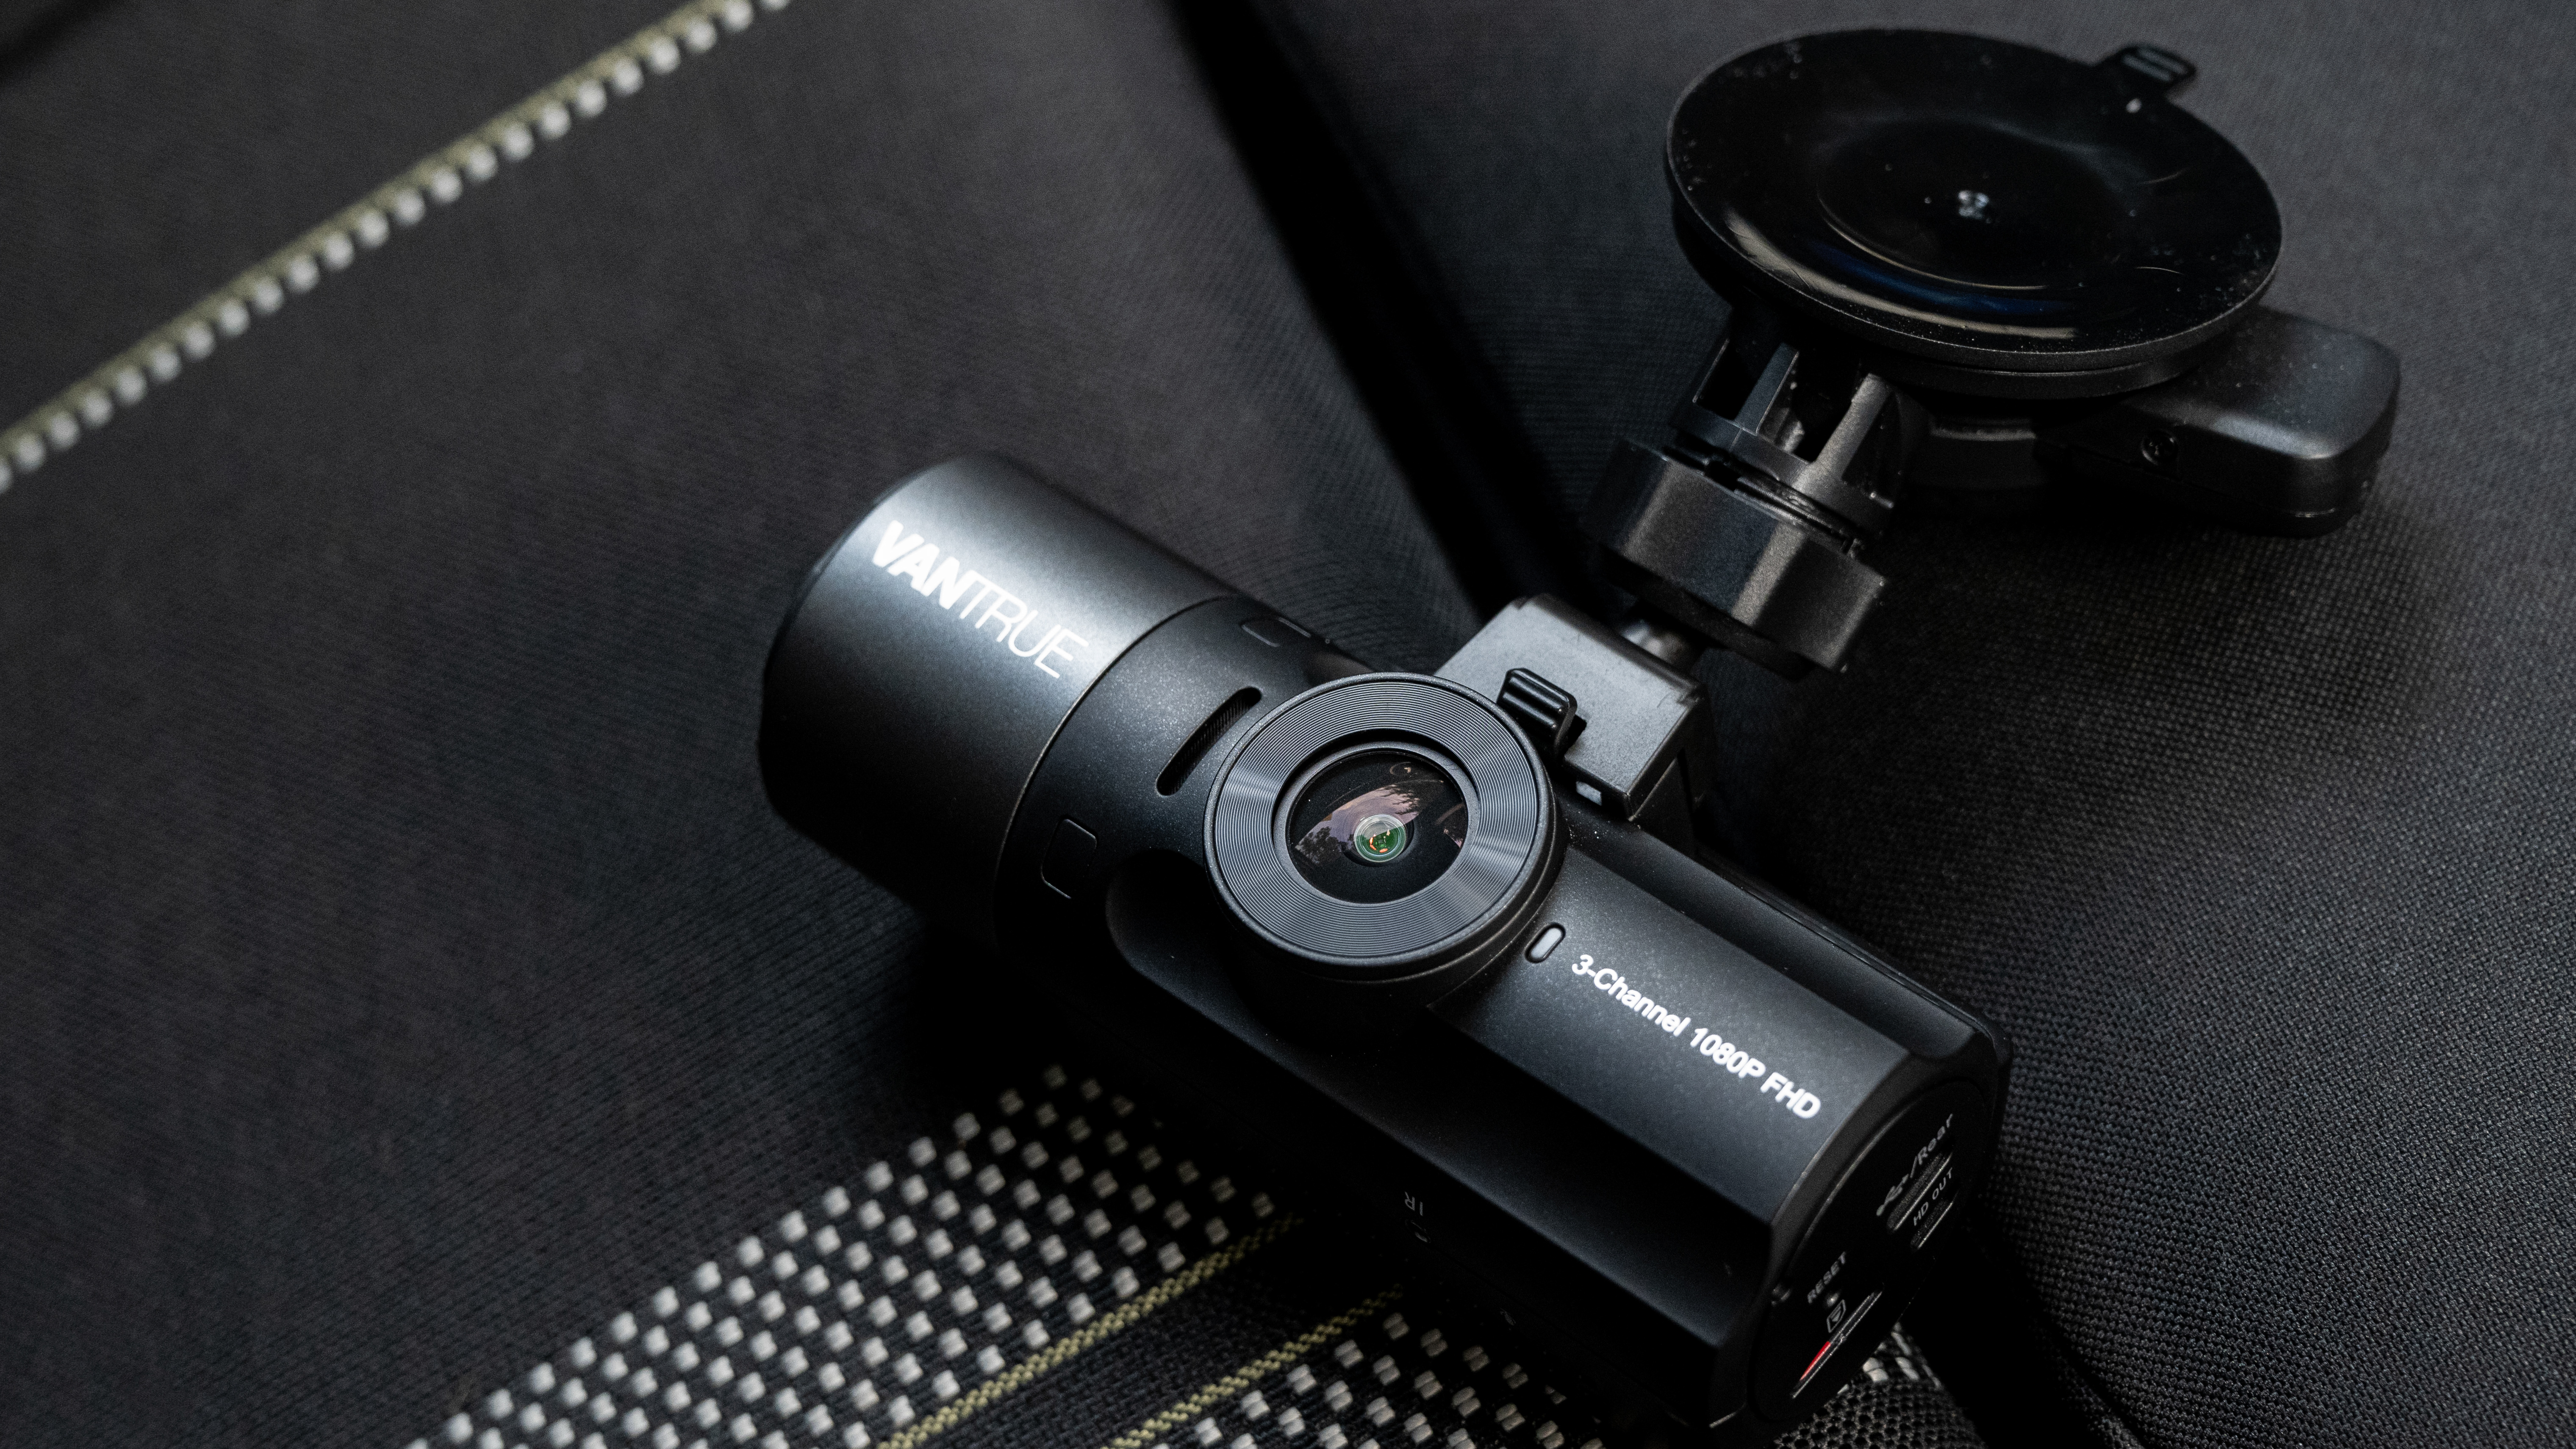 Vantrue N4 dashcam review